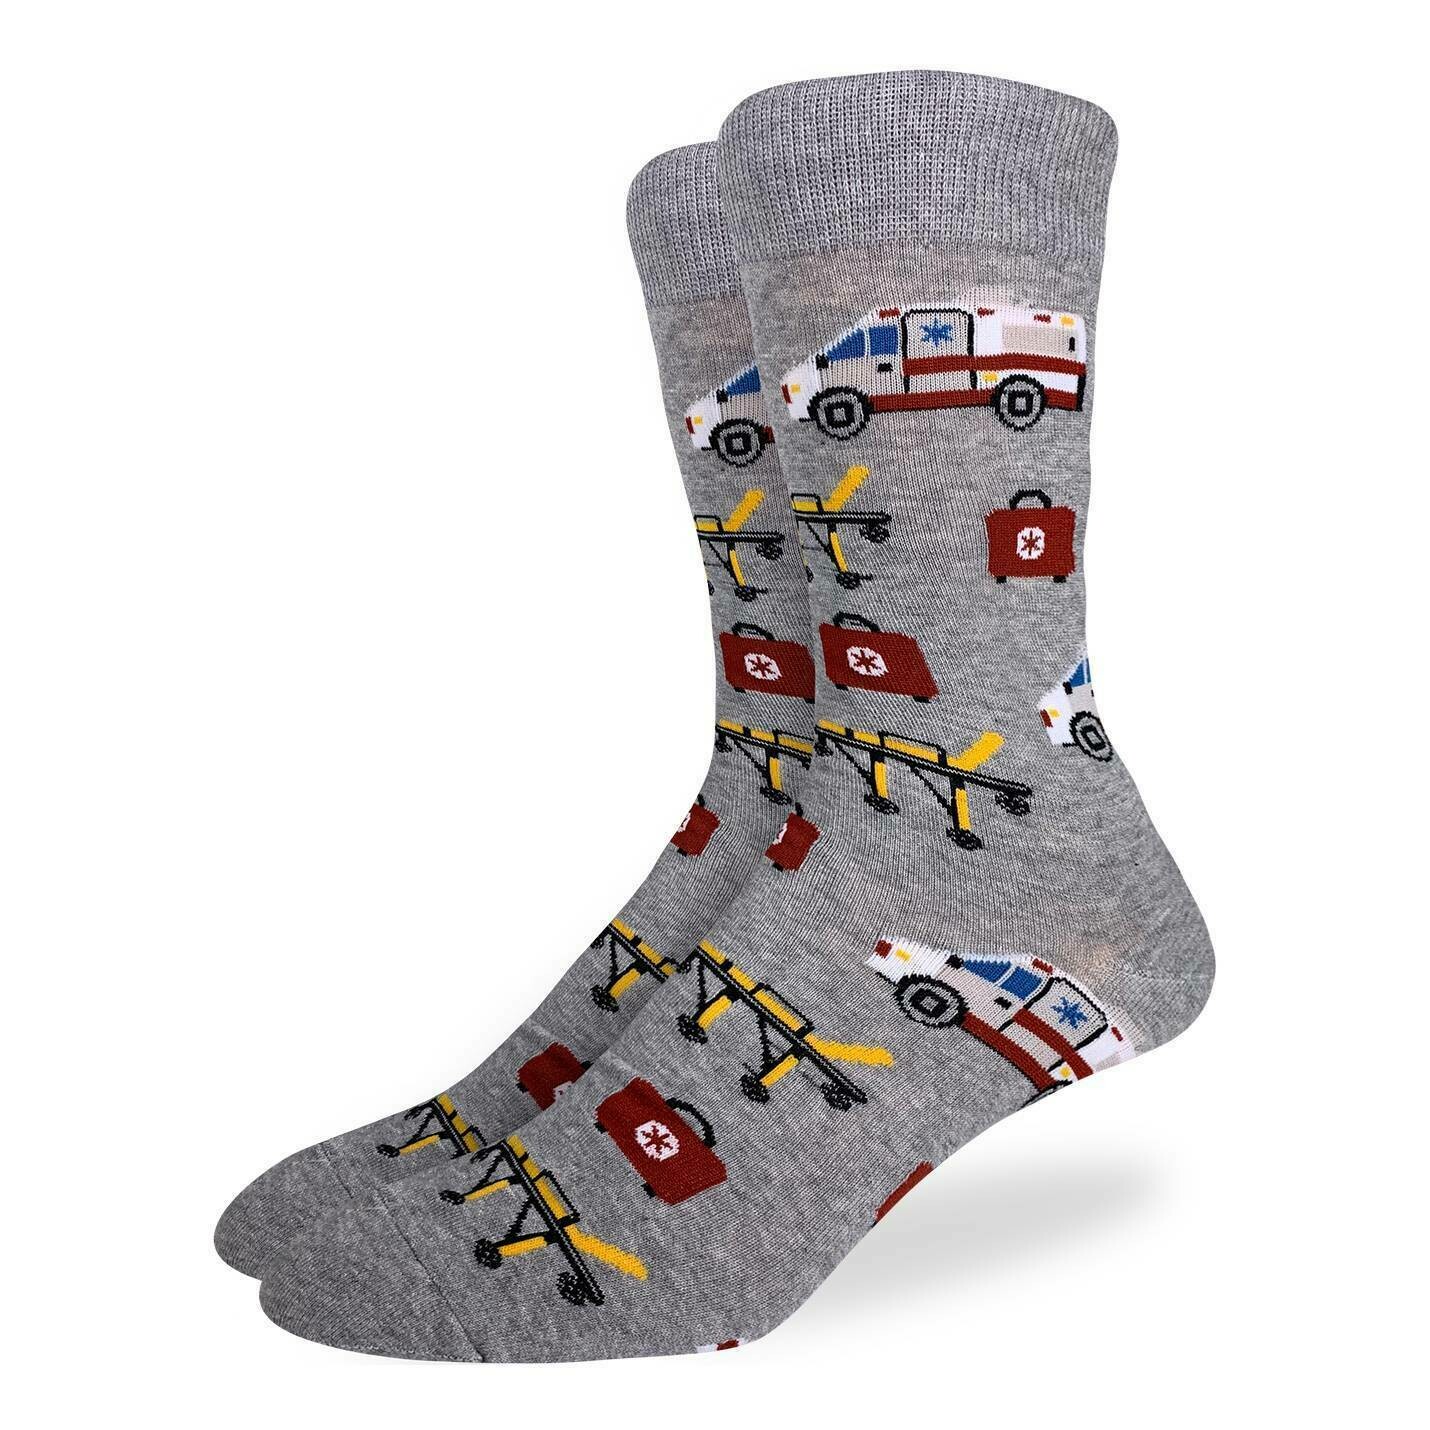 Paramedic socks | M/L/XL adult sizes | Good Luck Sock